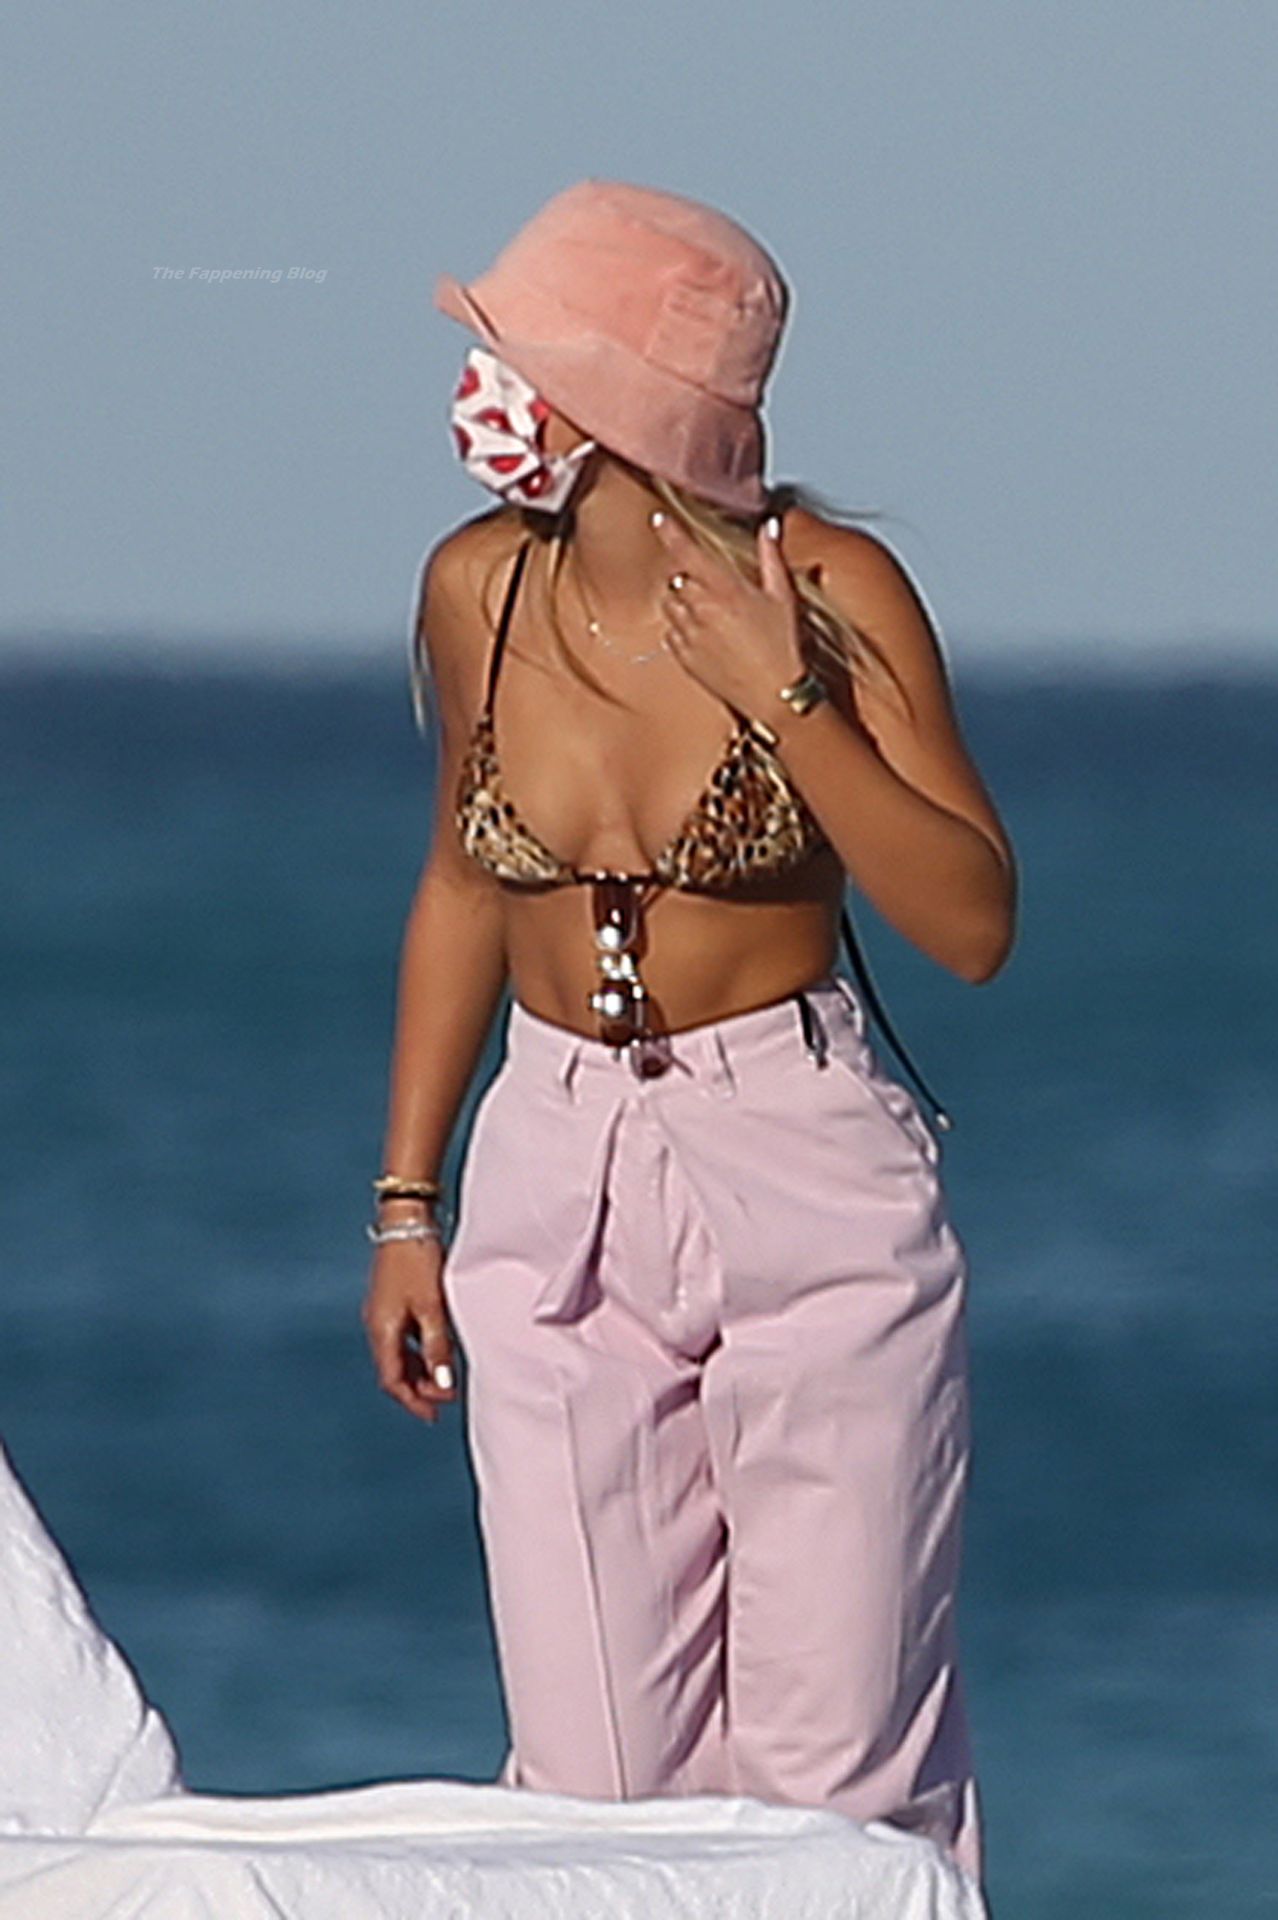 Sofia Richie Rocks a Bikini and Kisses a Mystery Man on the Beach in Miami (82 Photos)